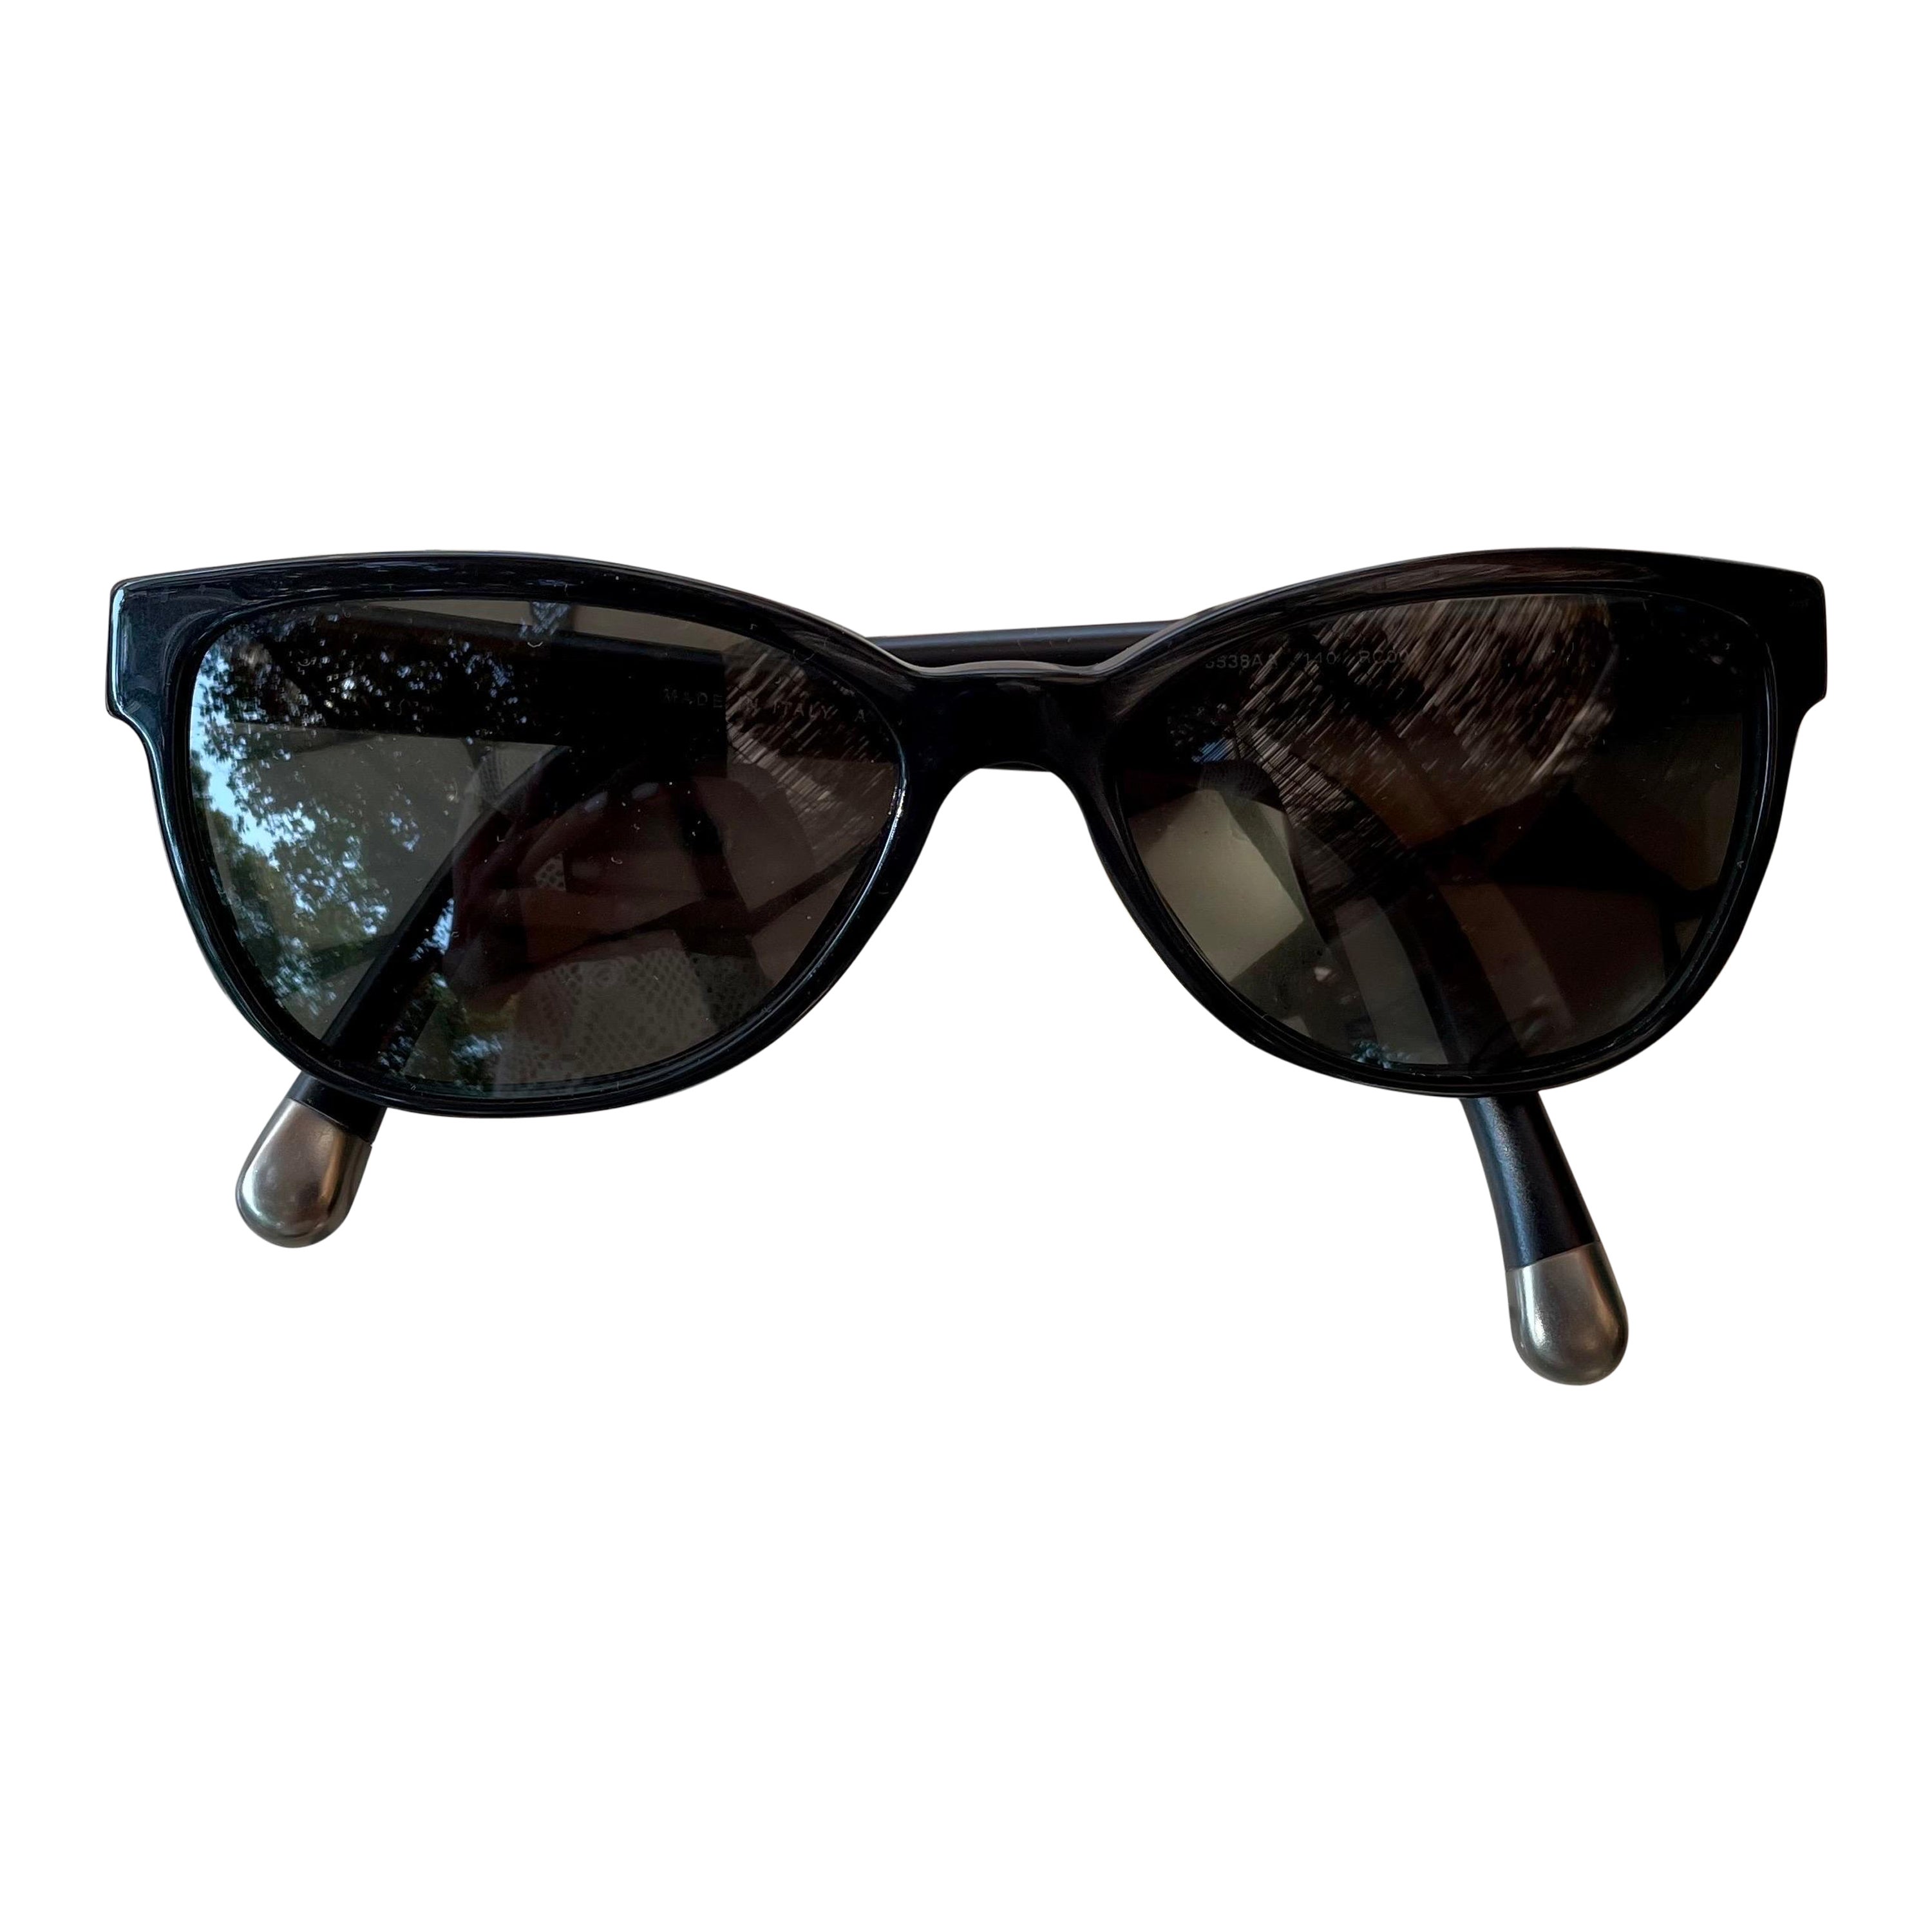 1990-2000s chain-link shield-frame sunglasses